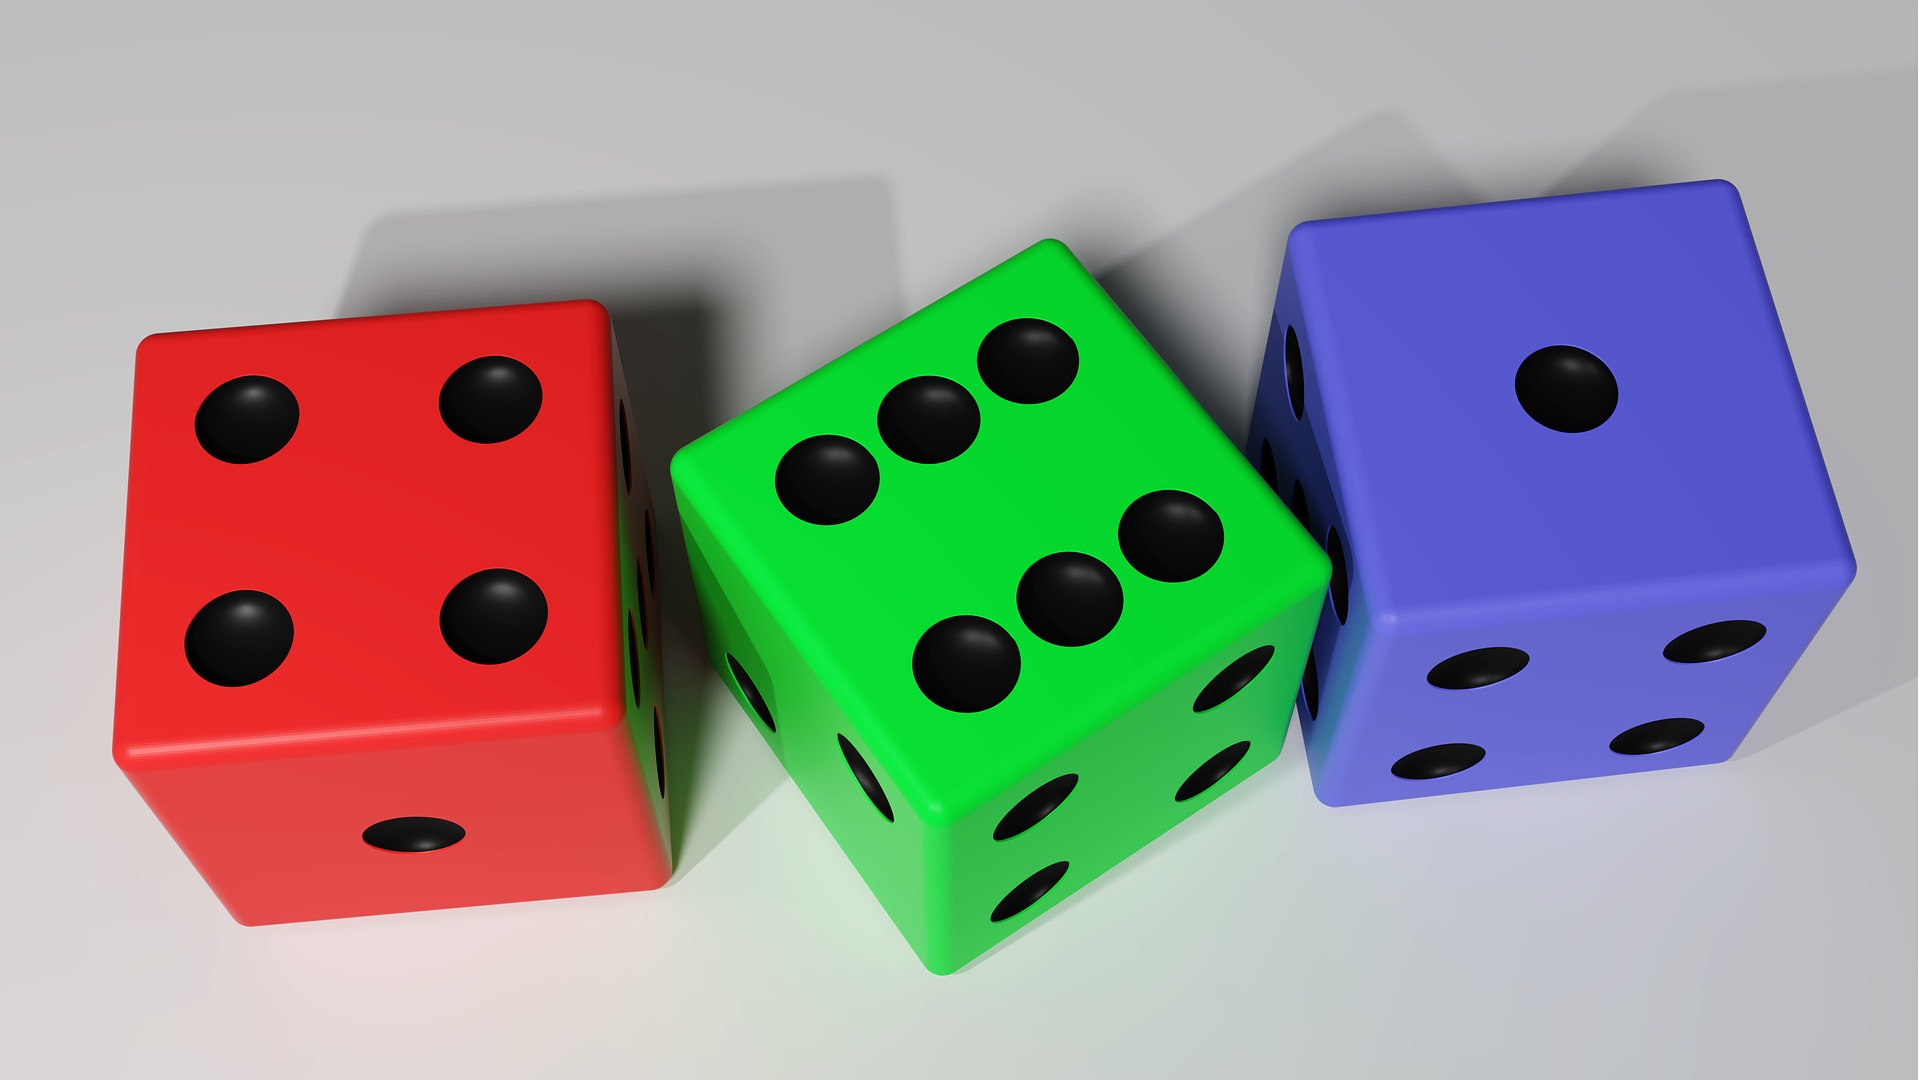 3 colorful dice